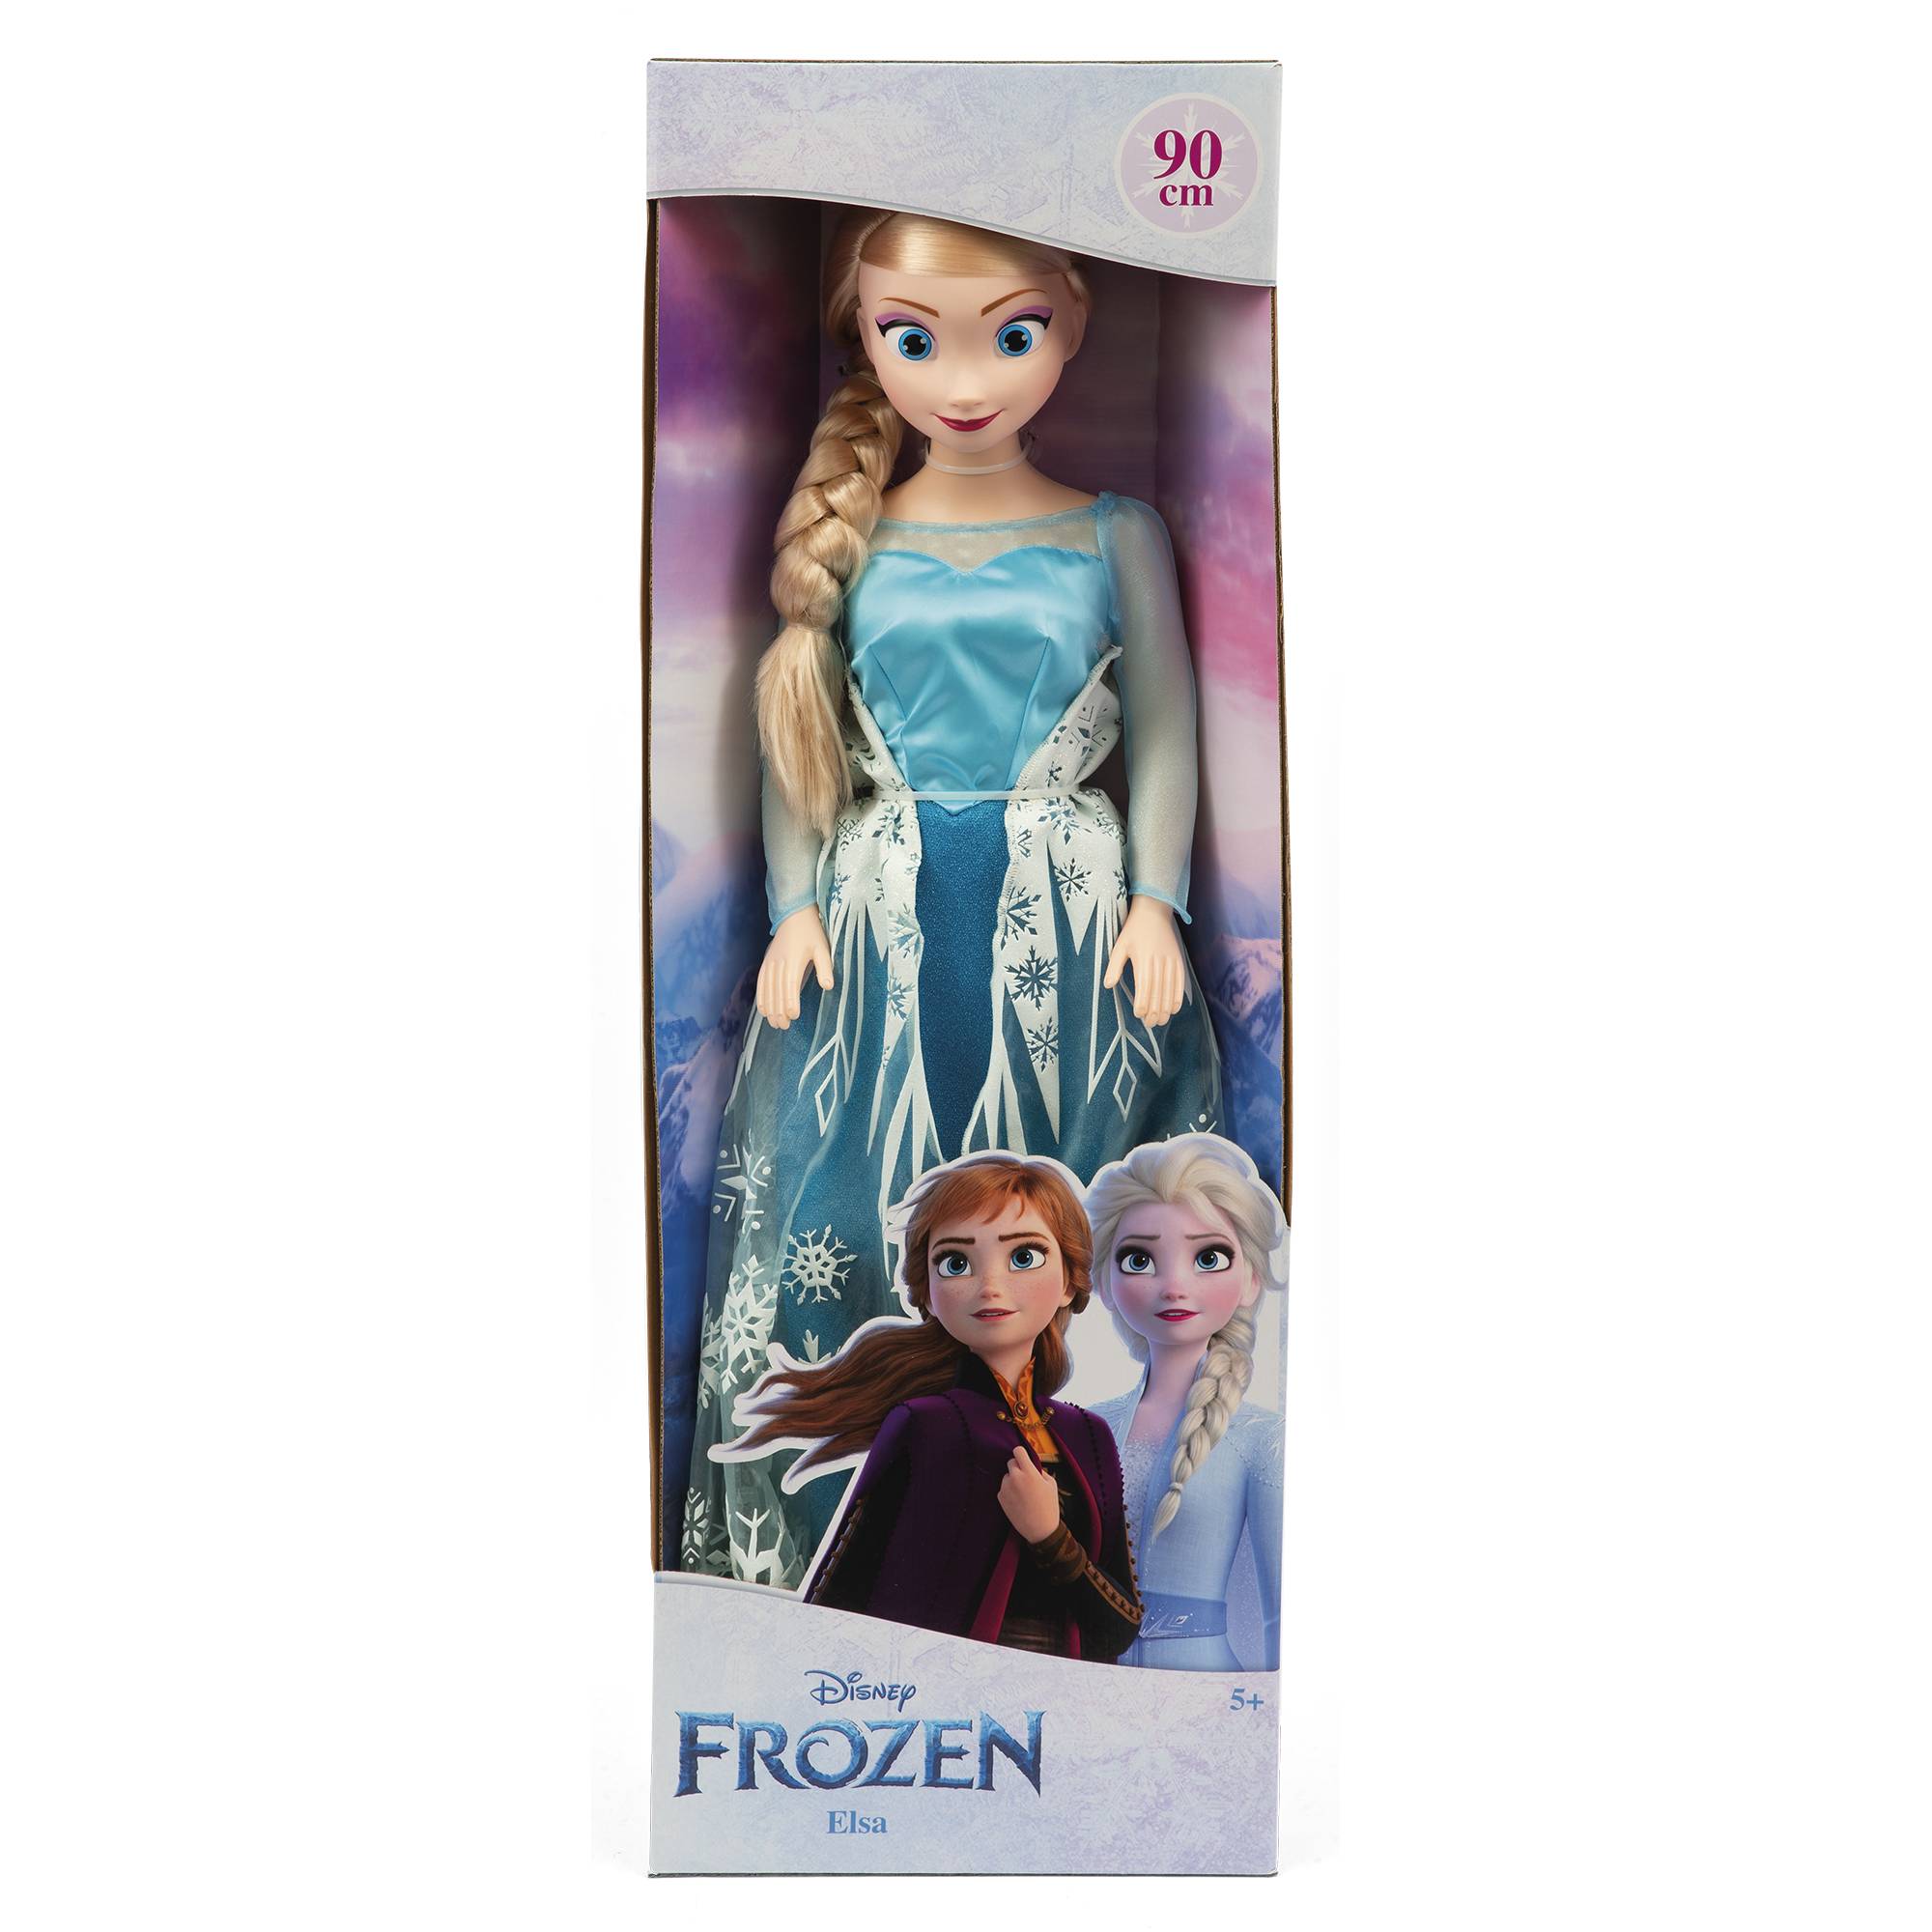 Disney frozen elsa 90cm - Frozen